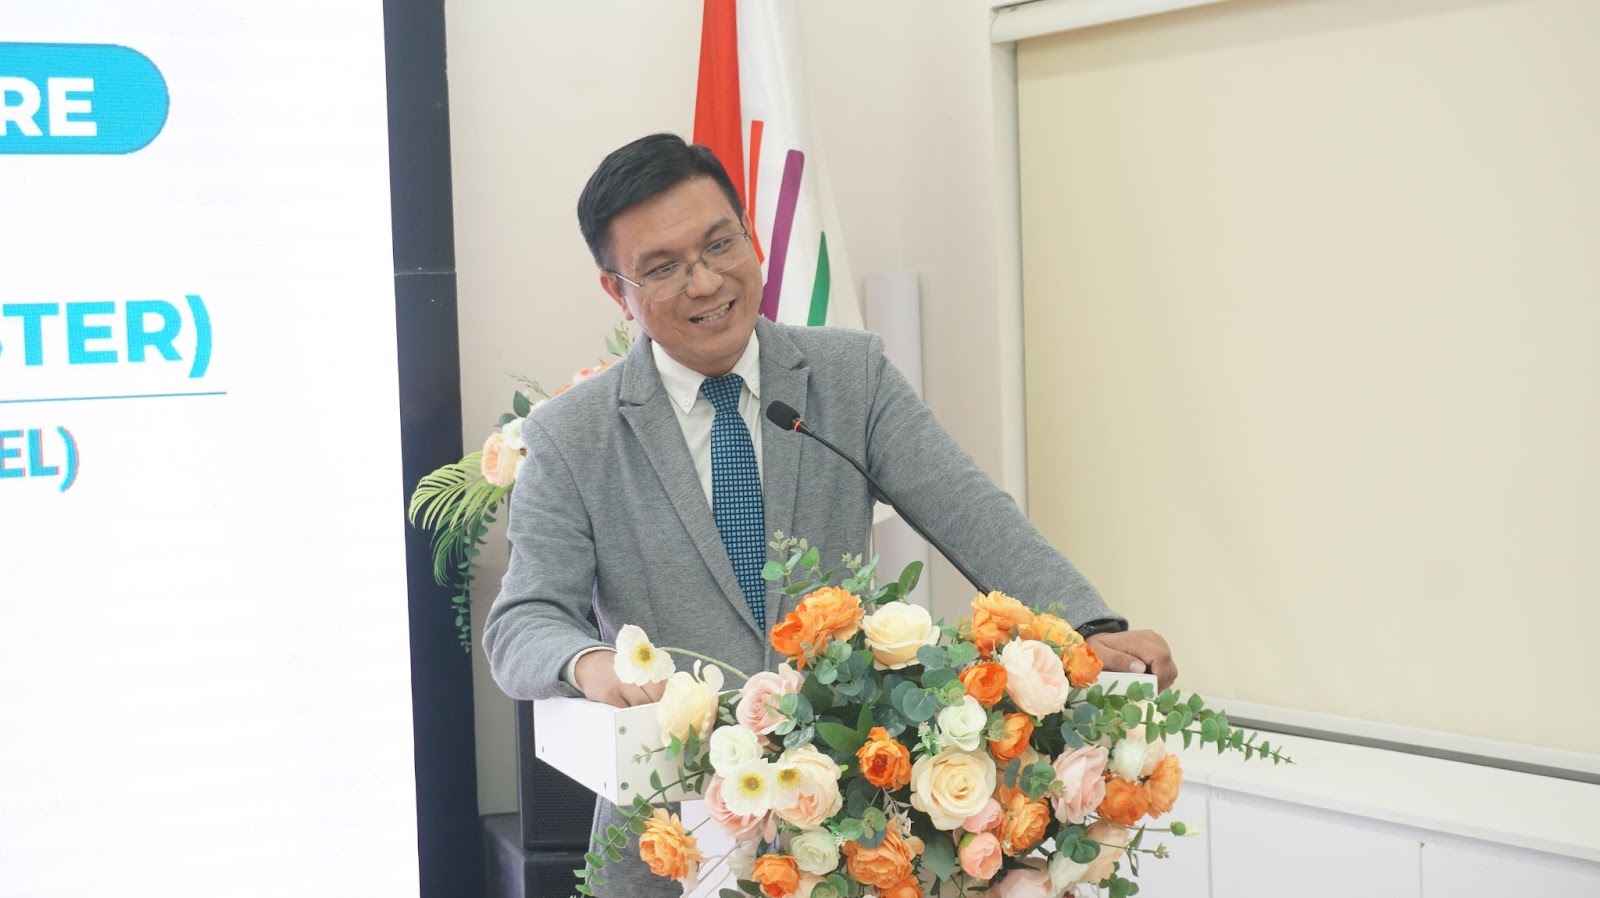 Mr. Hoàng Văn Cương, Mentor, Advisor at AAFV